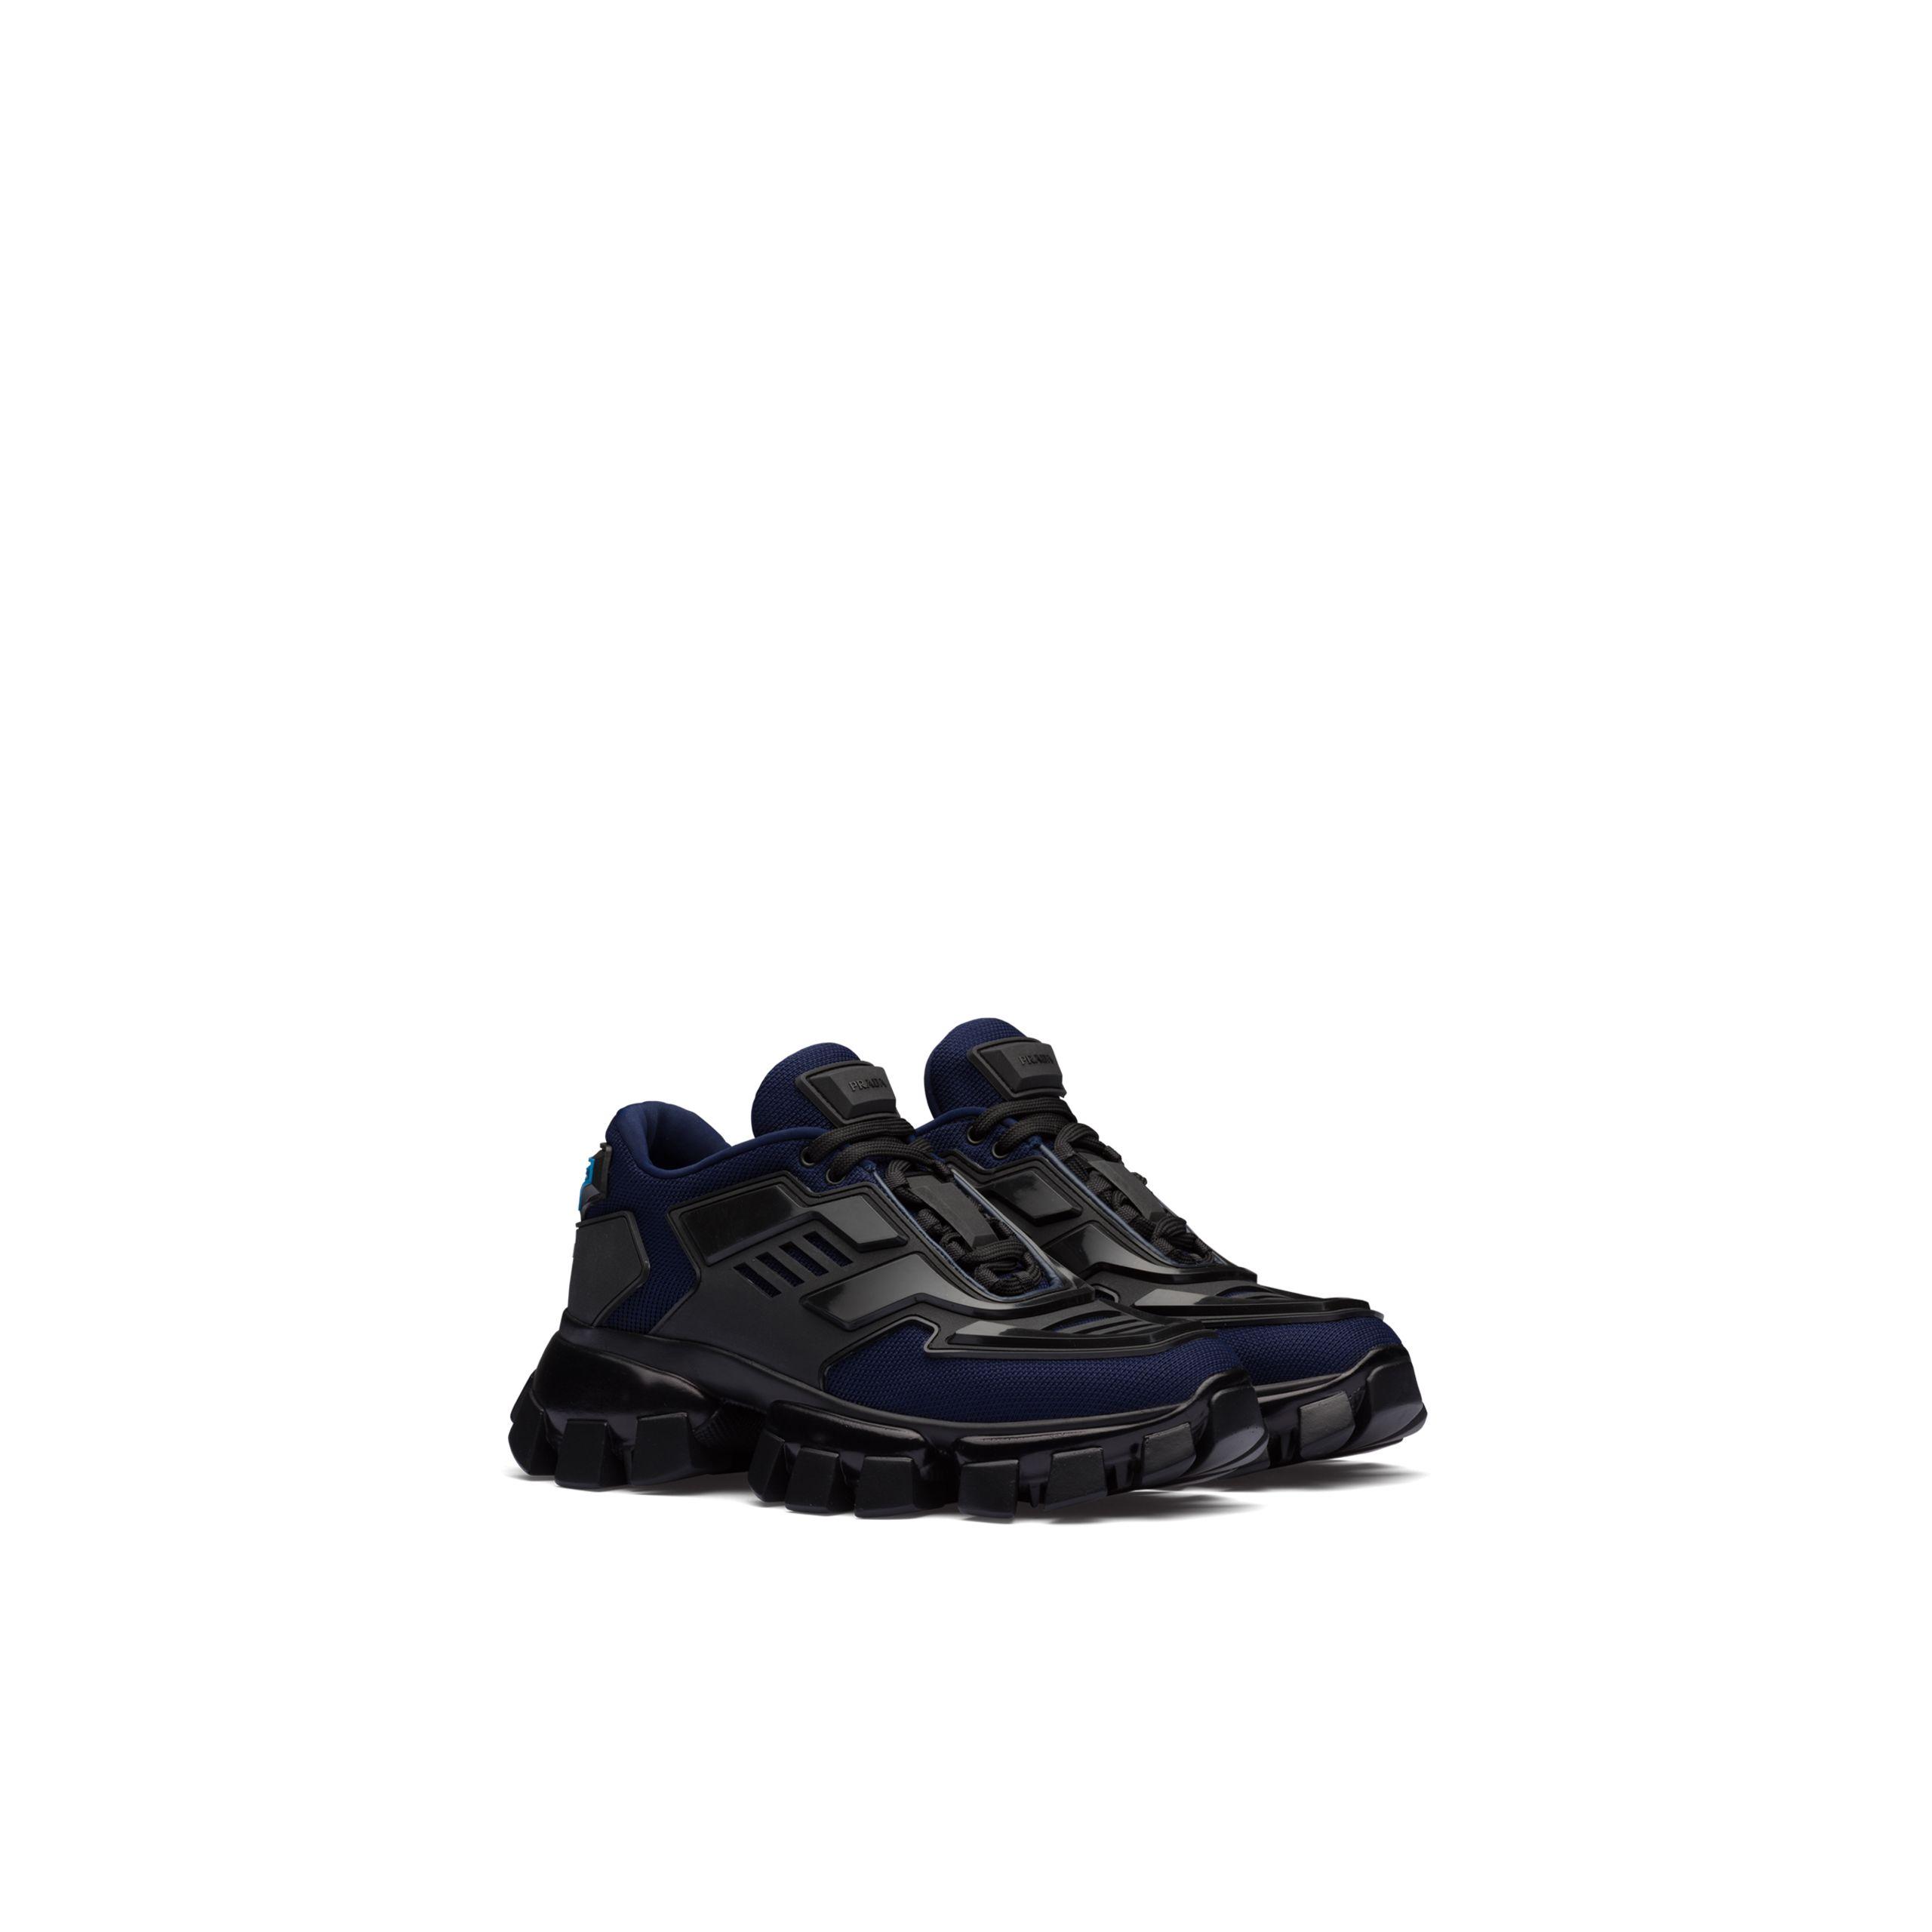 Prada Rubber Cloudbust Thunder Sneakers in Blue - Lyst